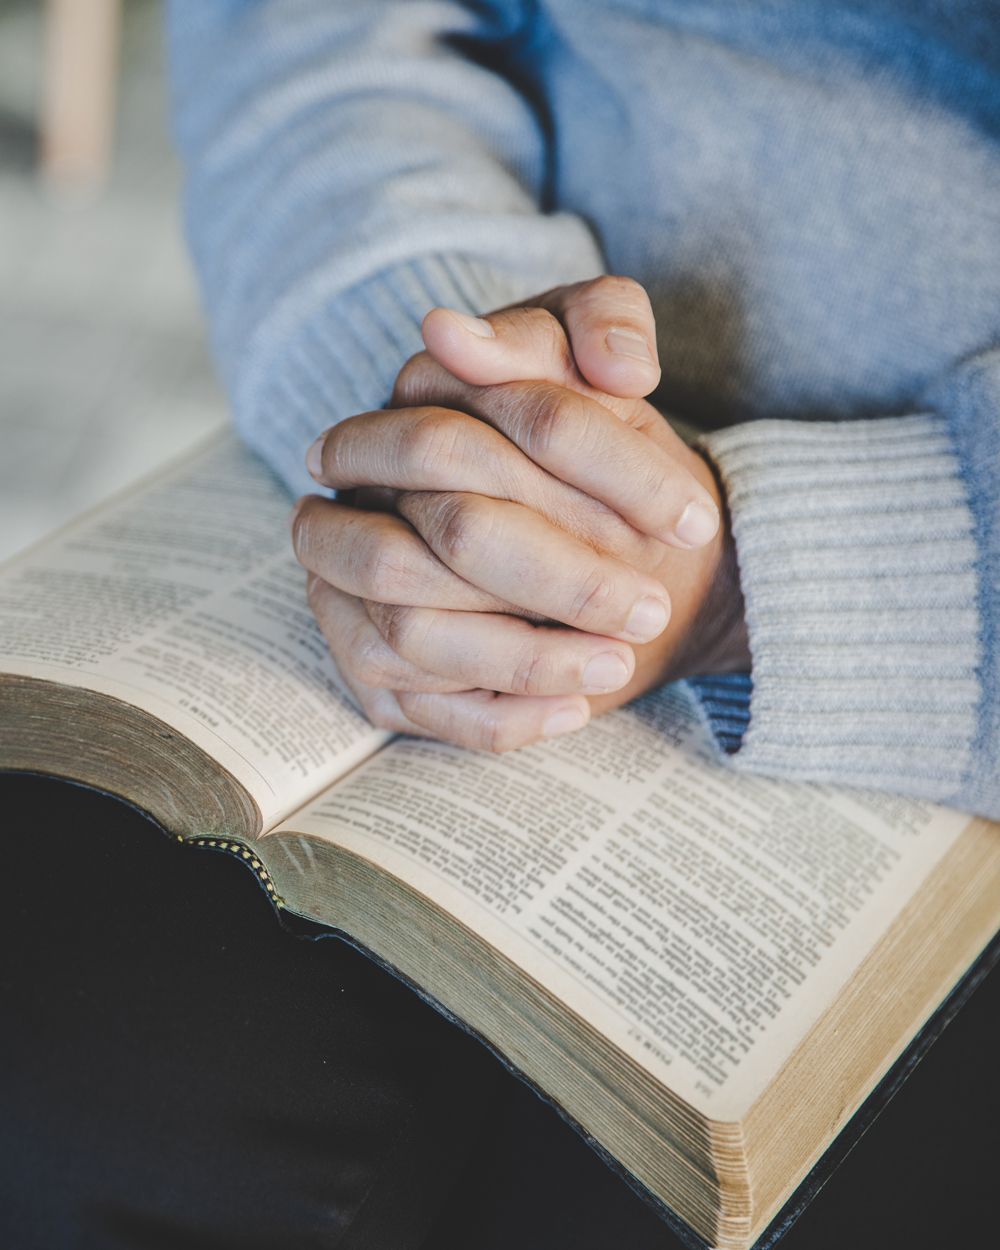 Woman Praying Over Her Bible